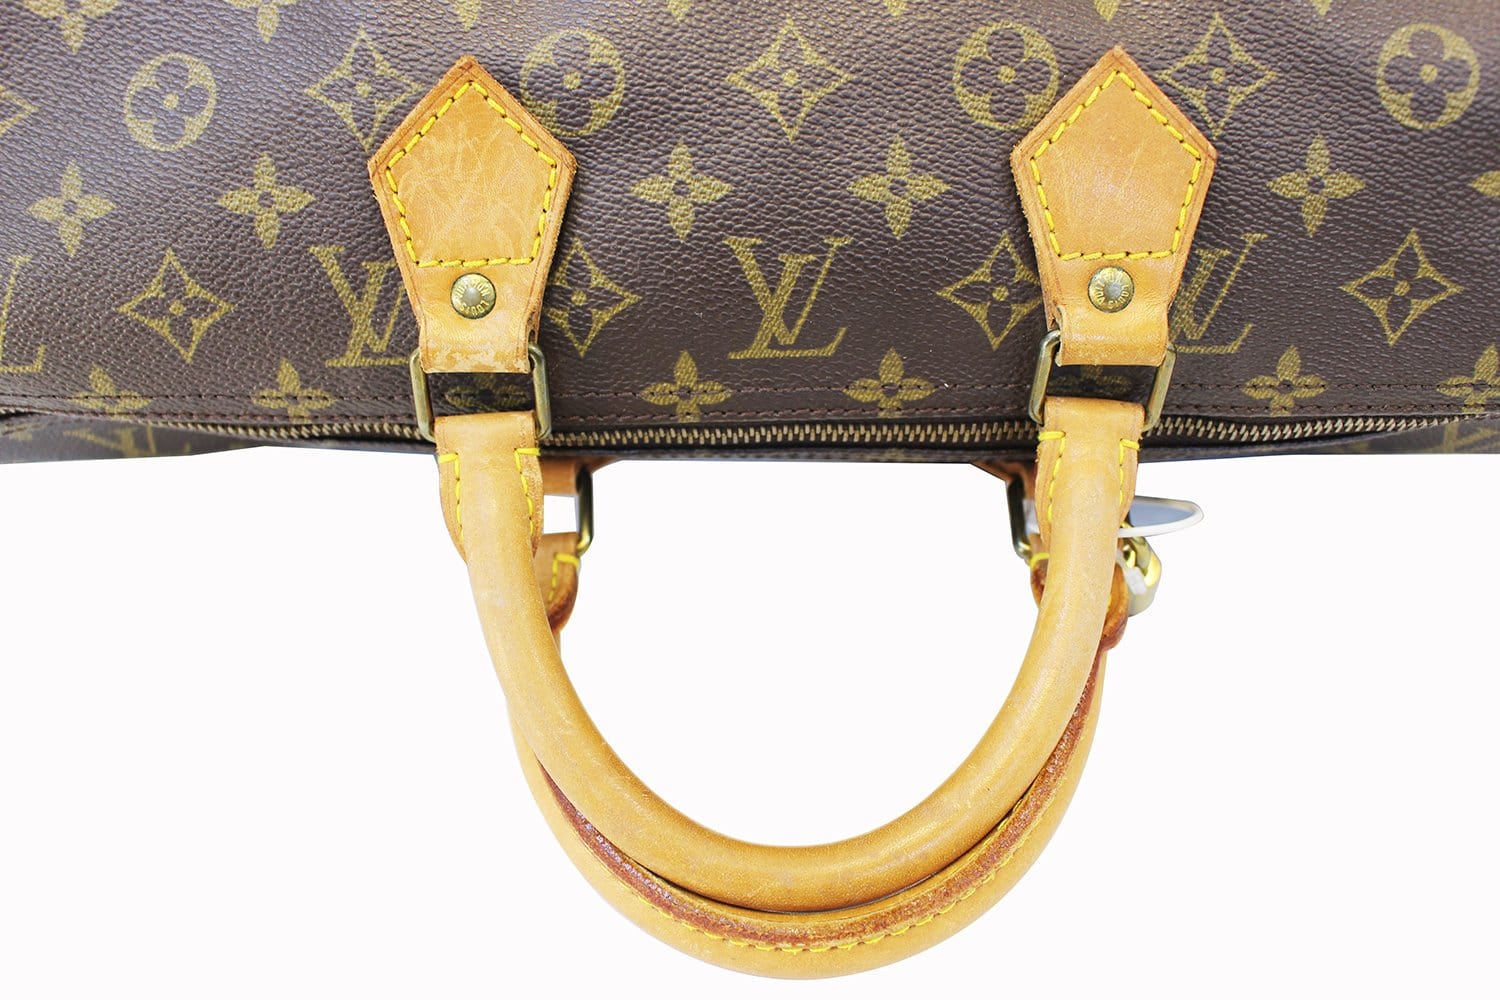 Authentic Louis Vuitton Speedy 40 Monogram Handbag for Sale in